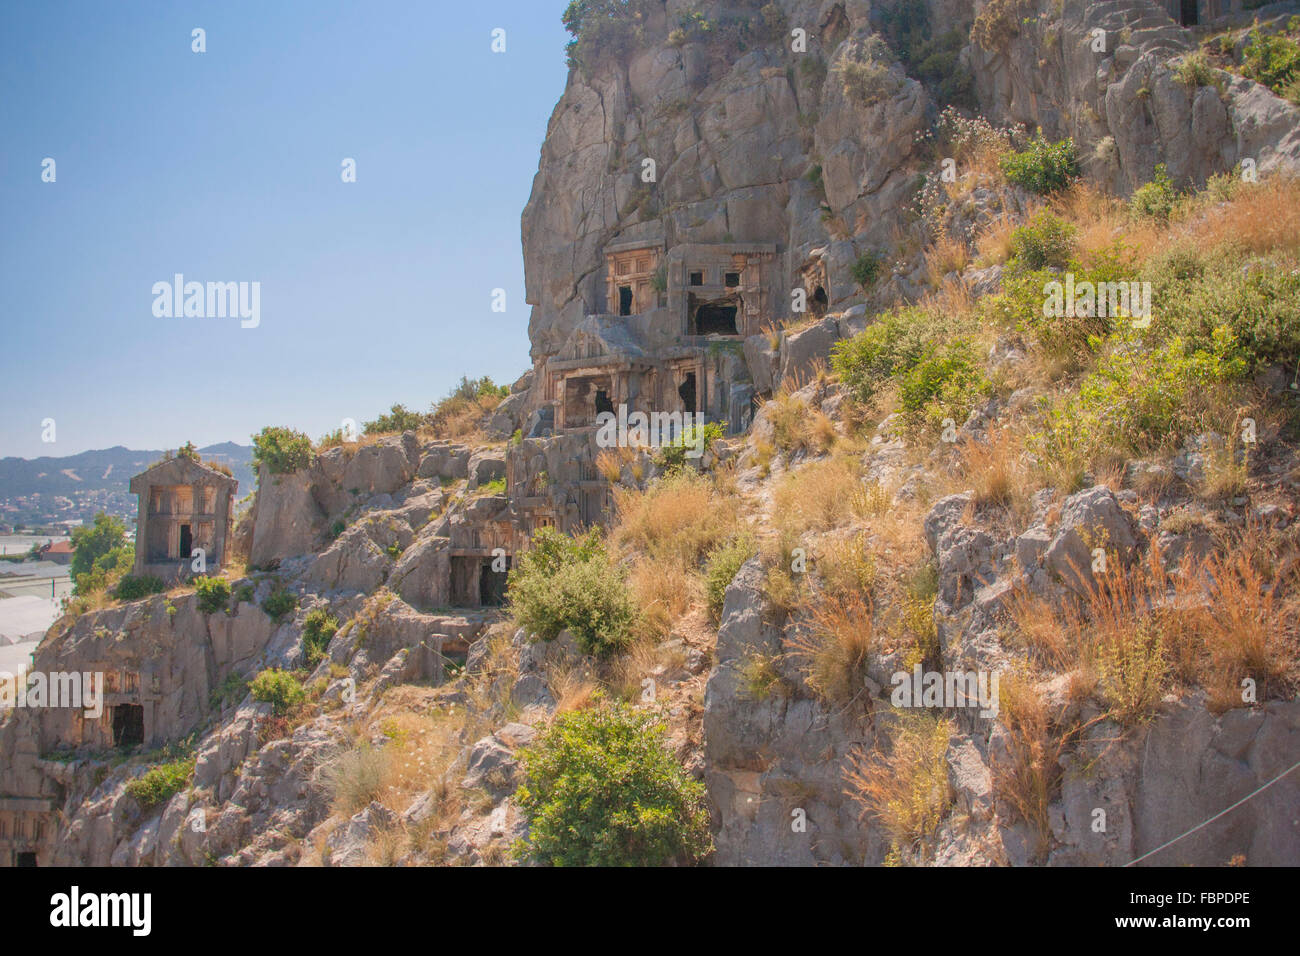 Ancient Lycian rock tombs in Myra, near Kale, Eastern Mediterranean Turkey ruins of Myra, Demre, Antalya Province, Lycia, Turkey Stock Photo